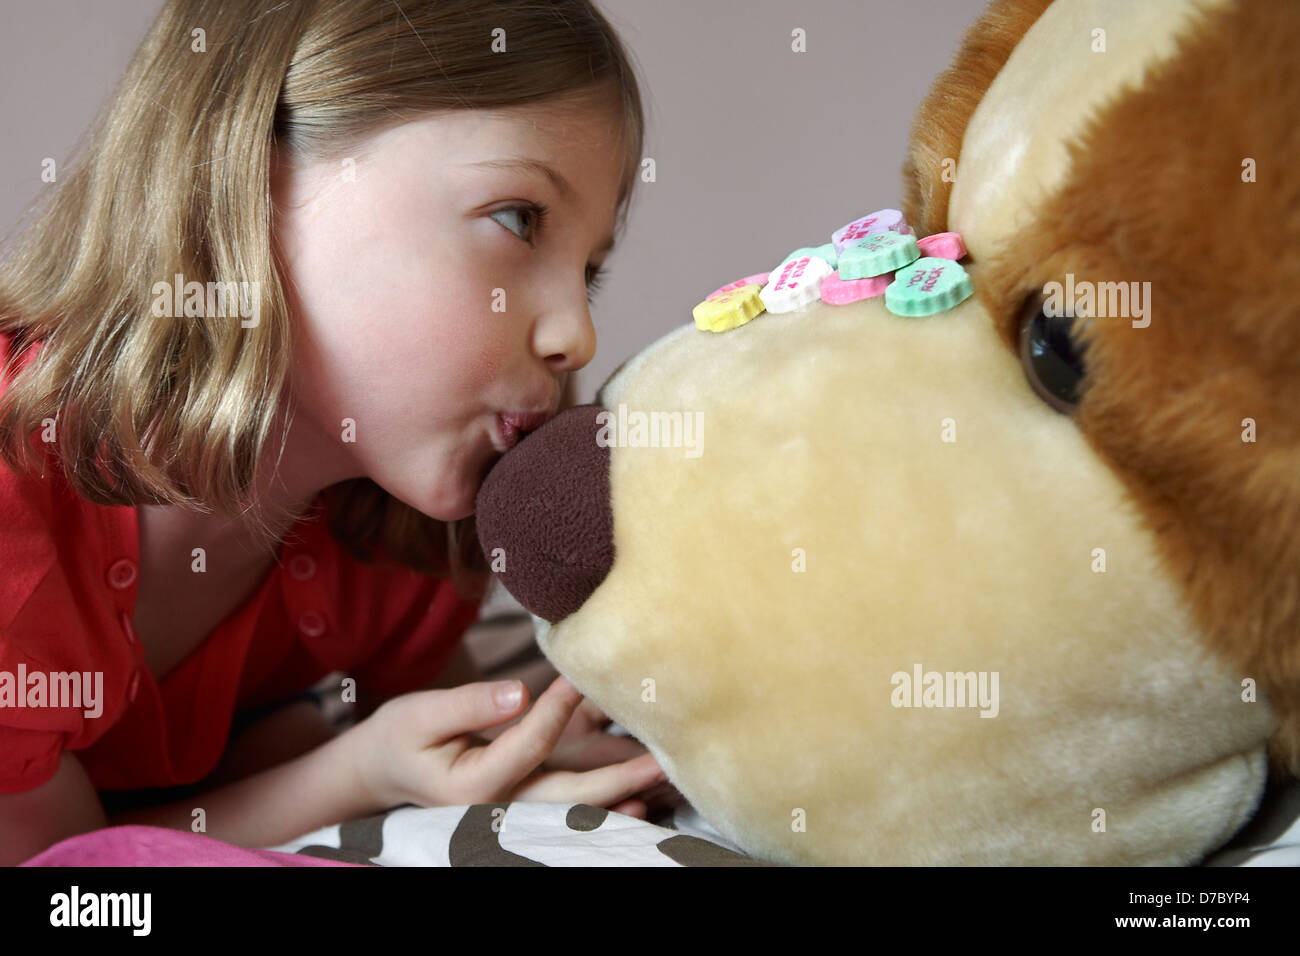 6 year old girl kissing stuffed animal Stock Photo